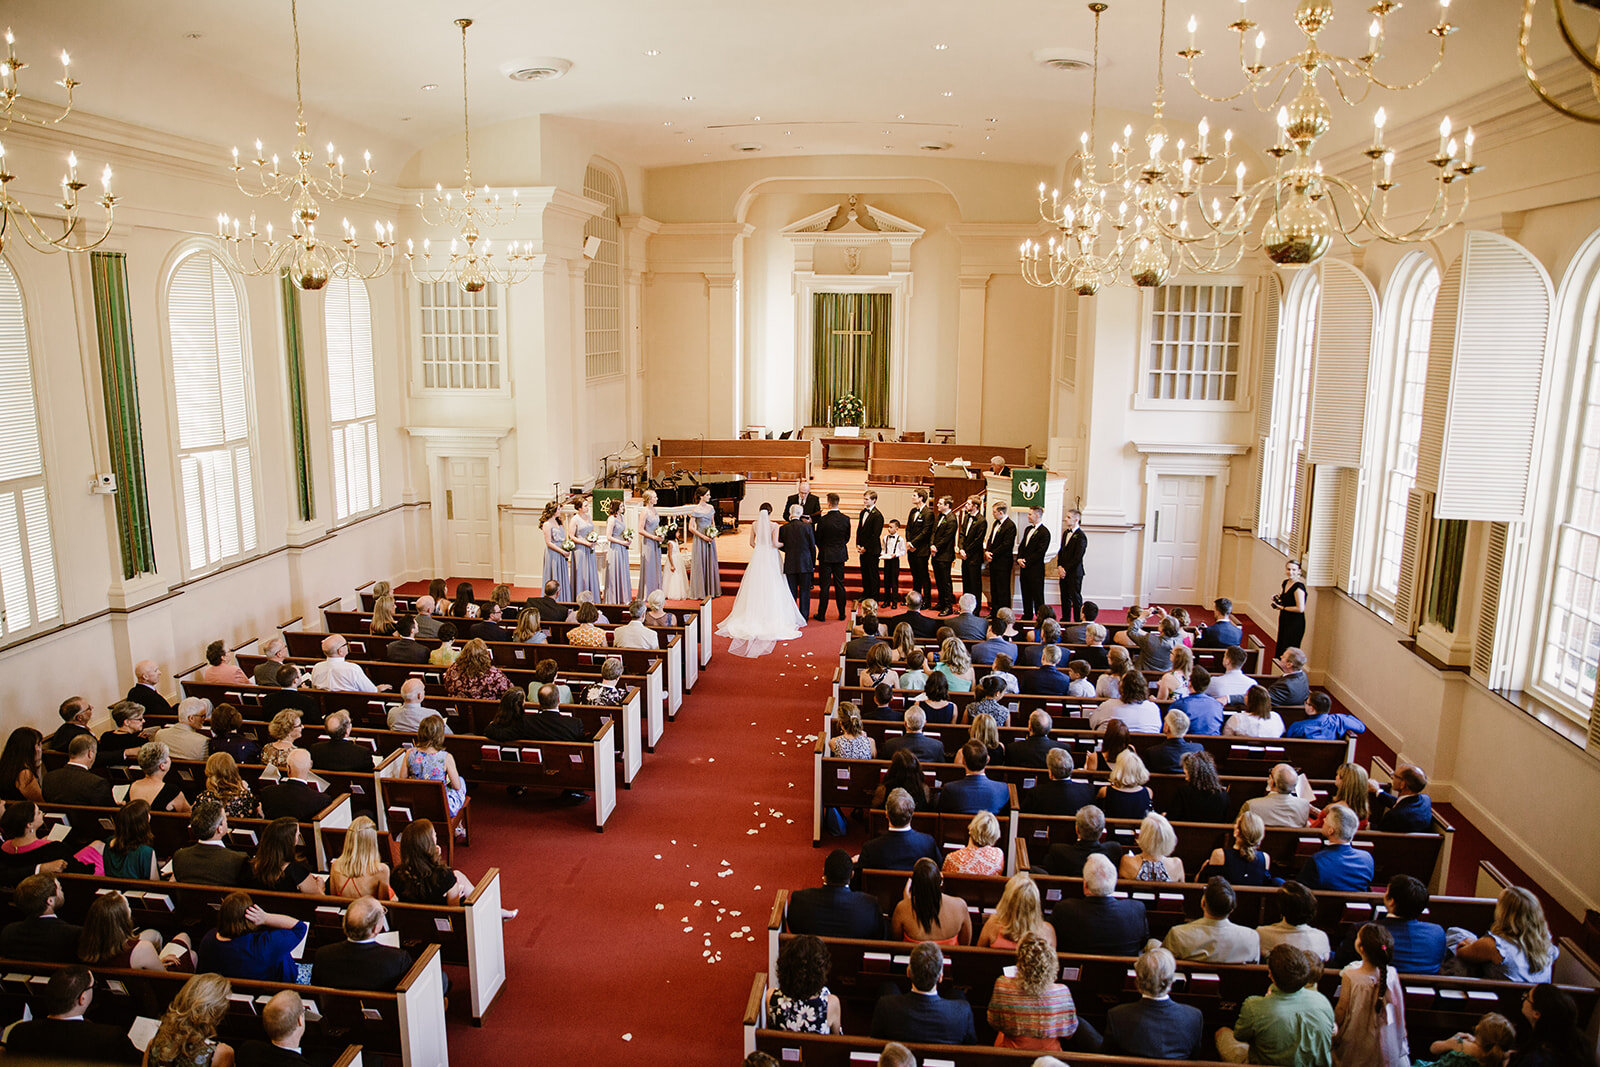  Indoor Church Ceremony | Sarah Mattozzi Photography | Ball Gown Wedding Dress and Black Tux | Outdoor Classic Wedding at Third Church and Veritas School | Richmond Wedding Photographer 